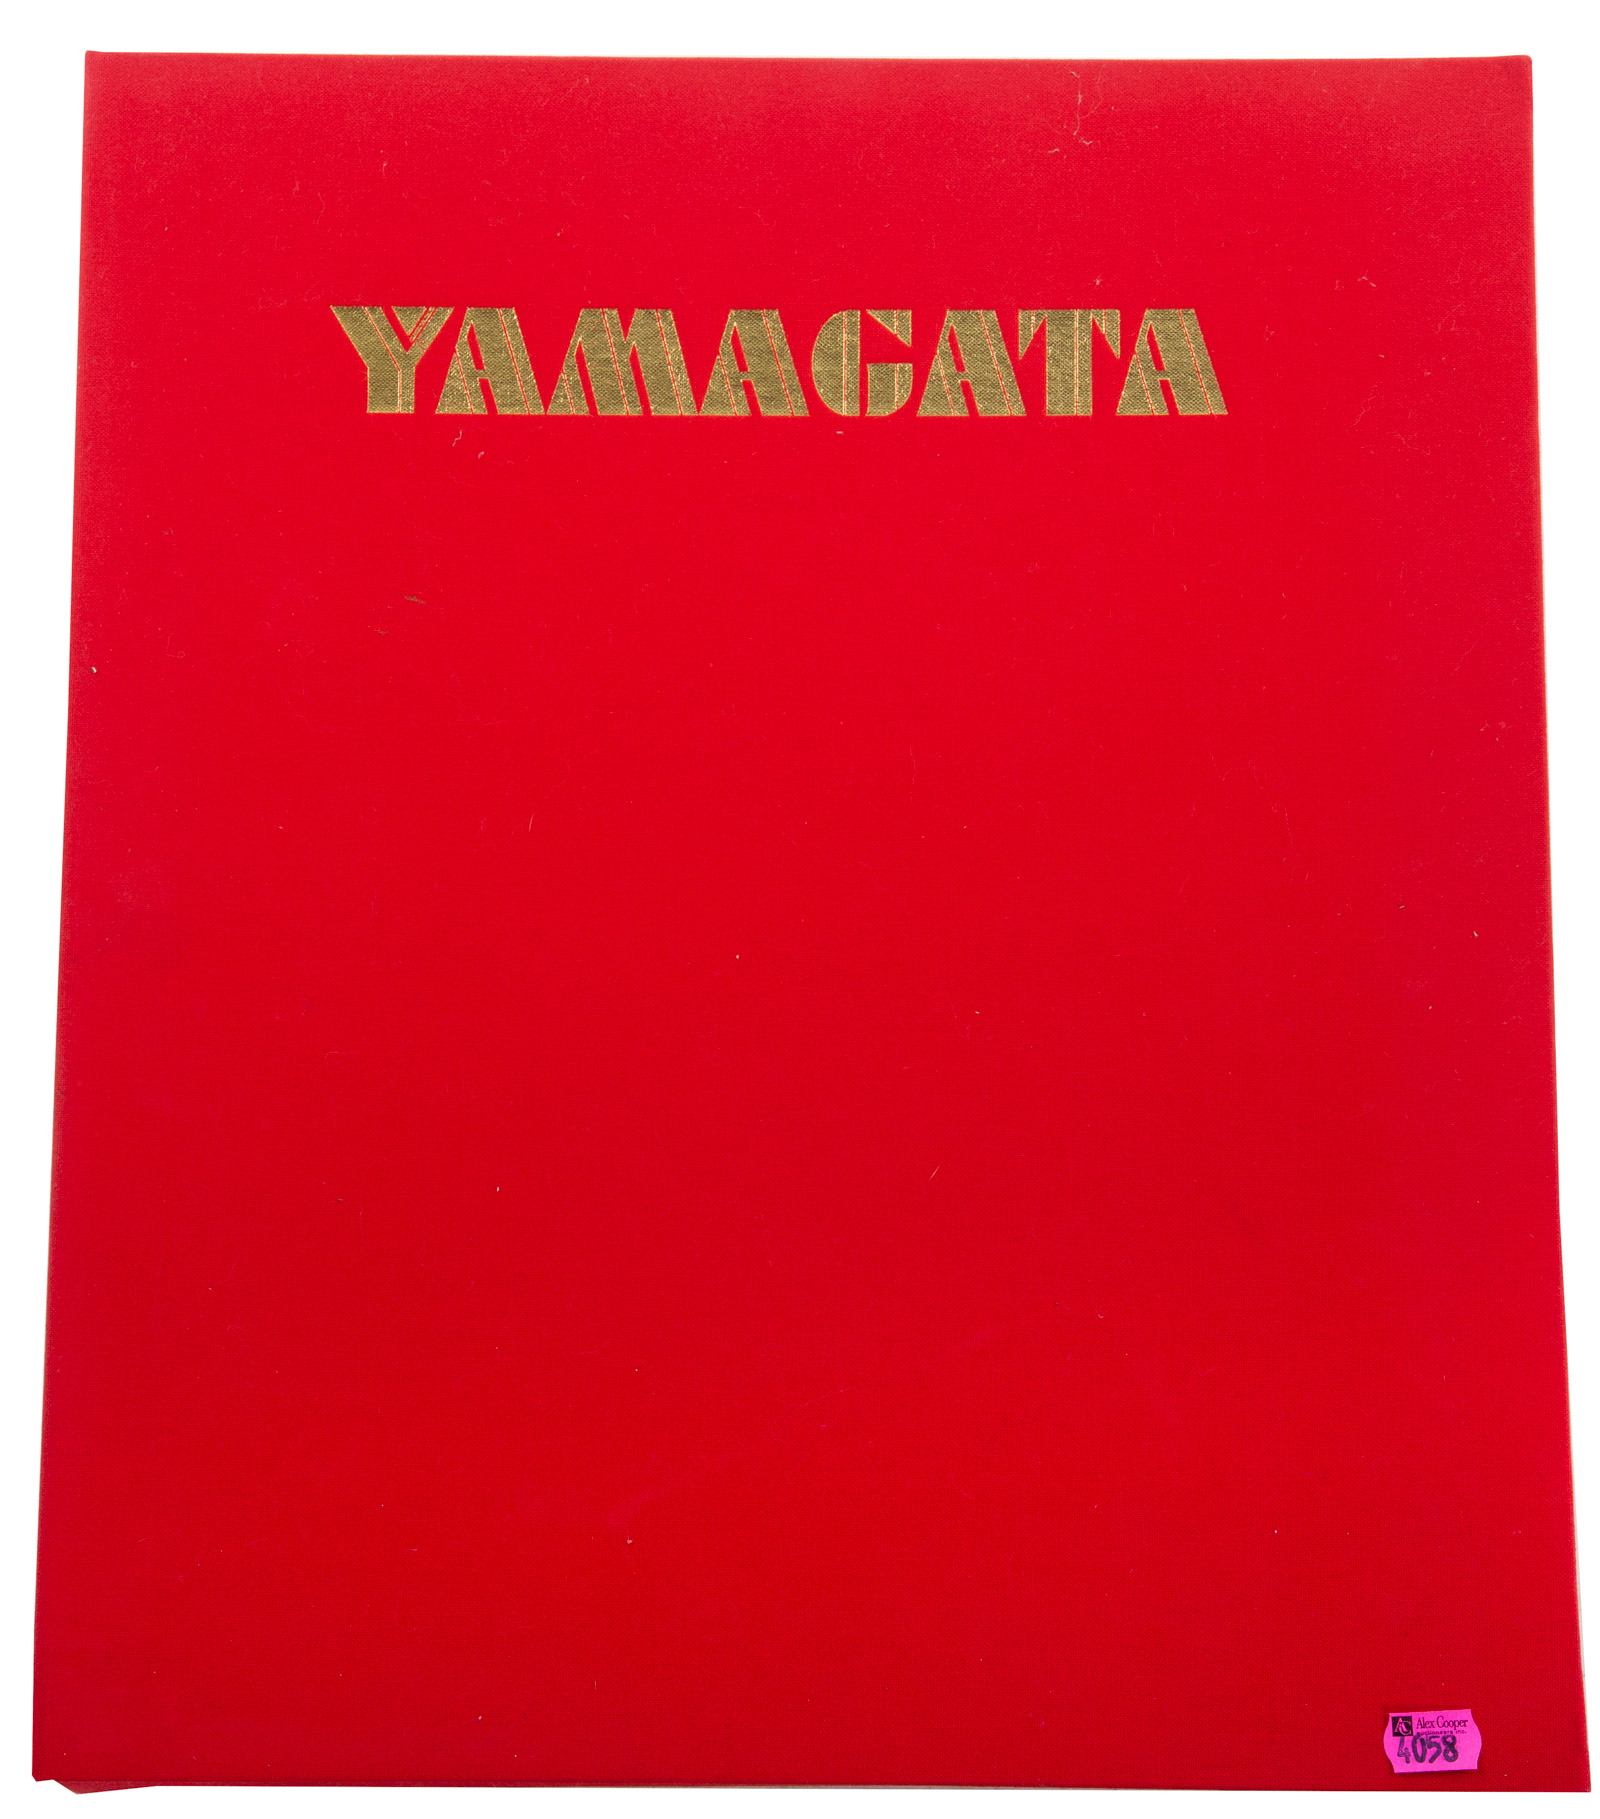 HIRO YAMAGATA. "FOUR CITIES SUITE,"